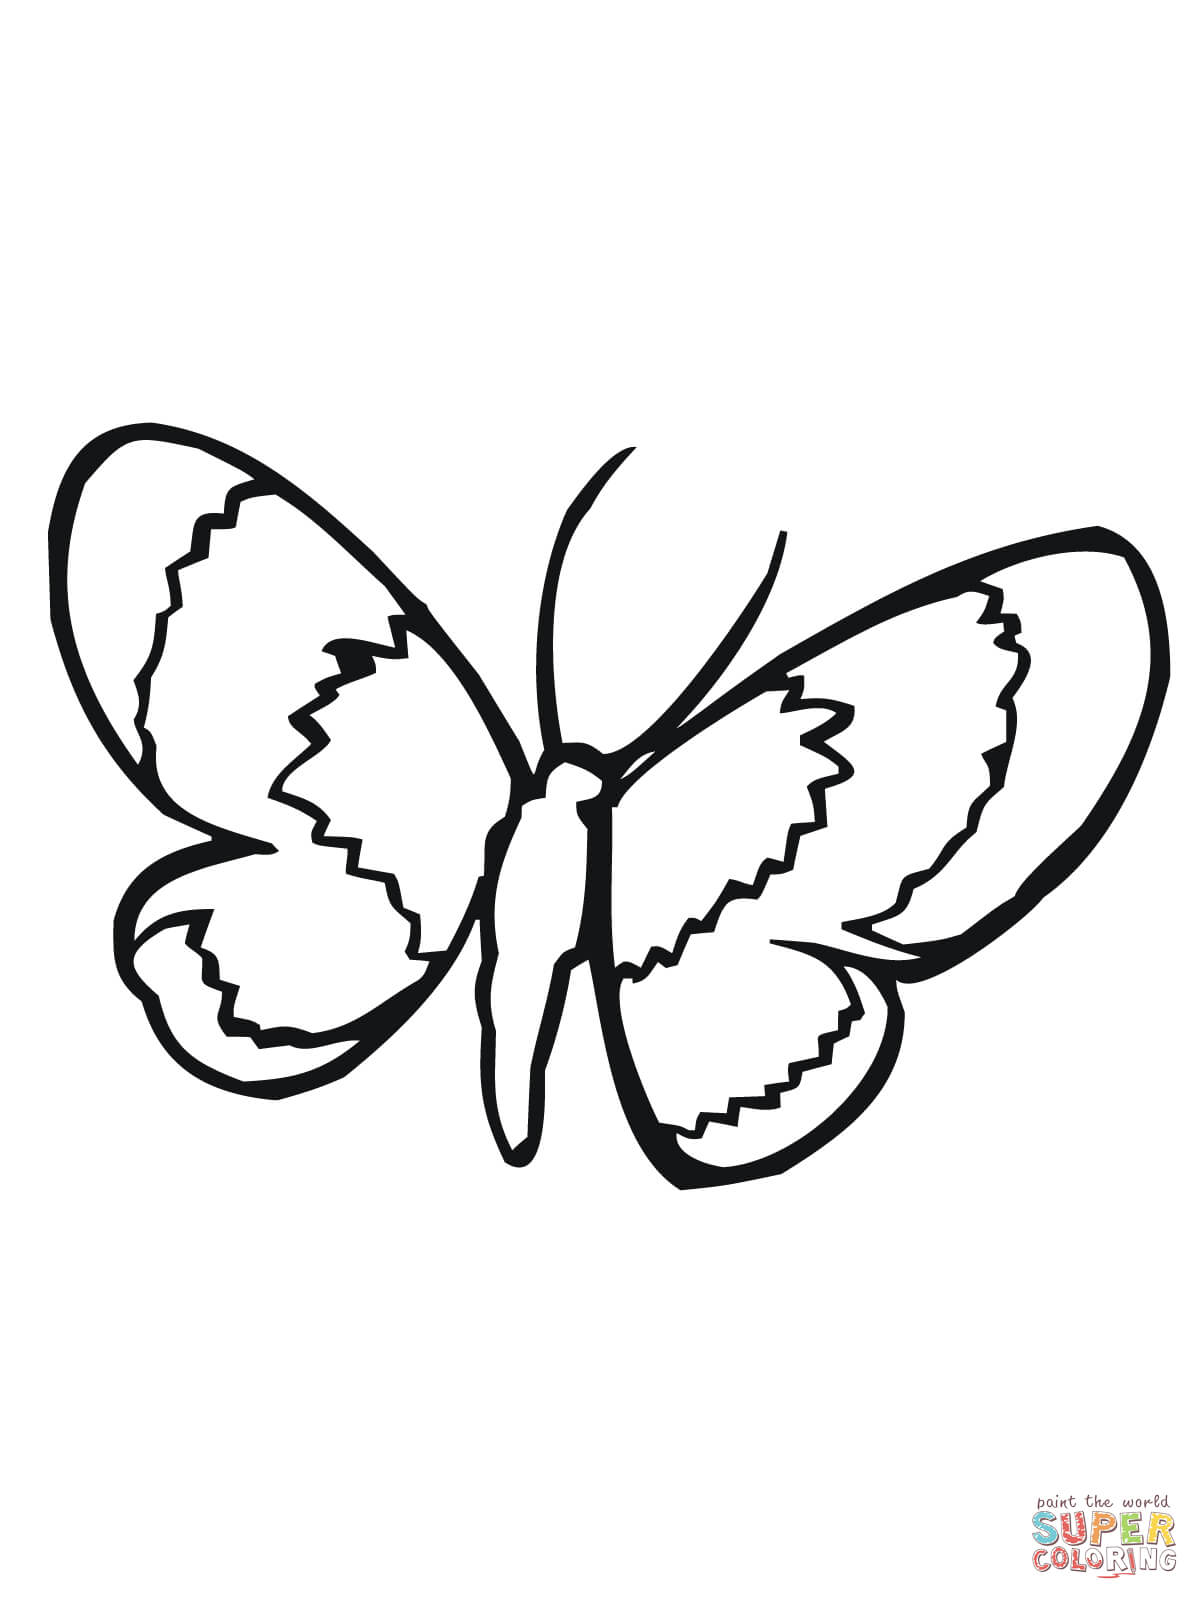 Cecropia Moth coloring #6, Download drawings